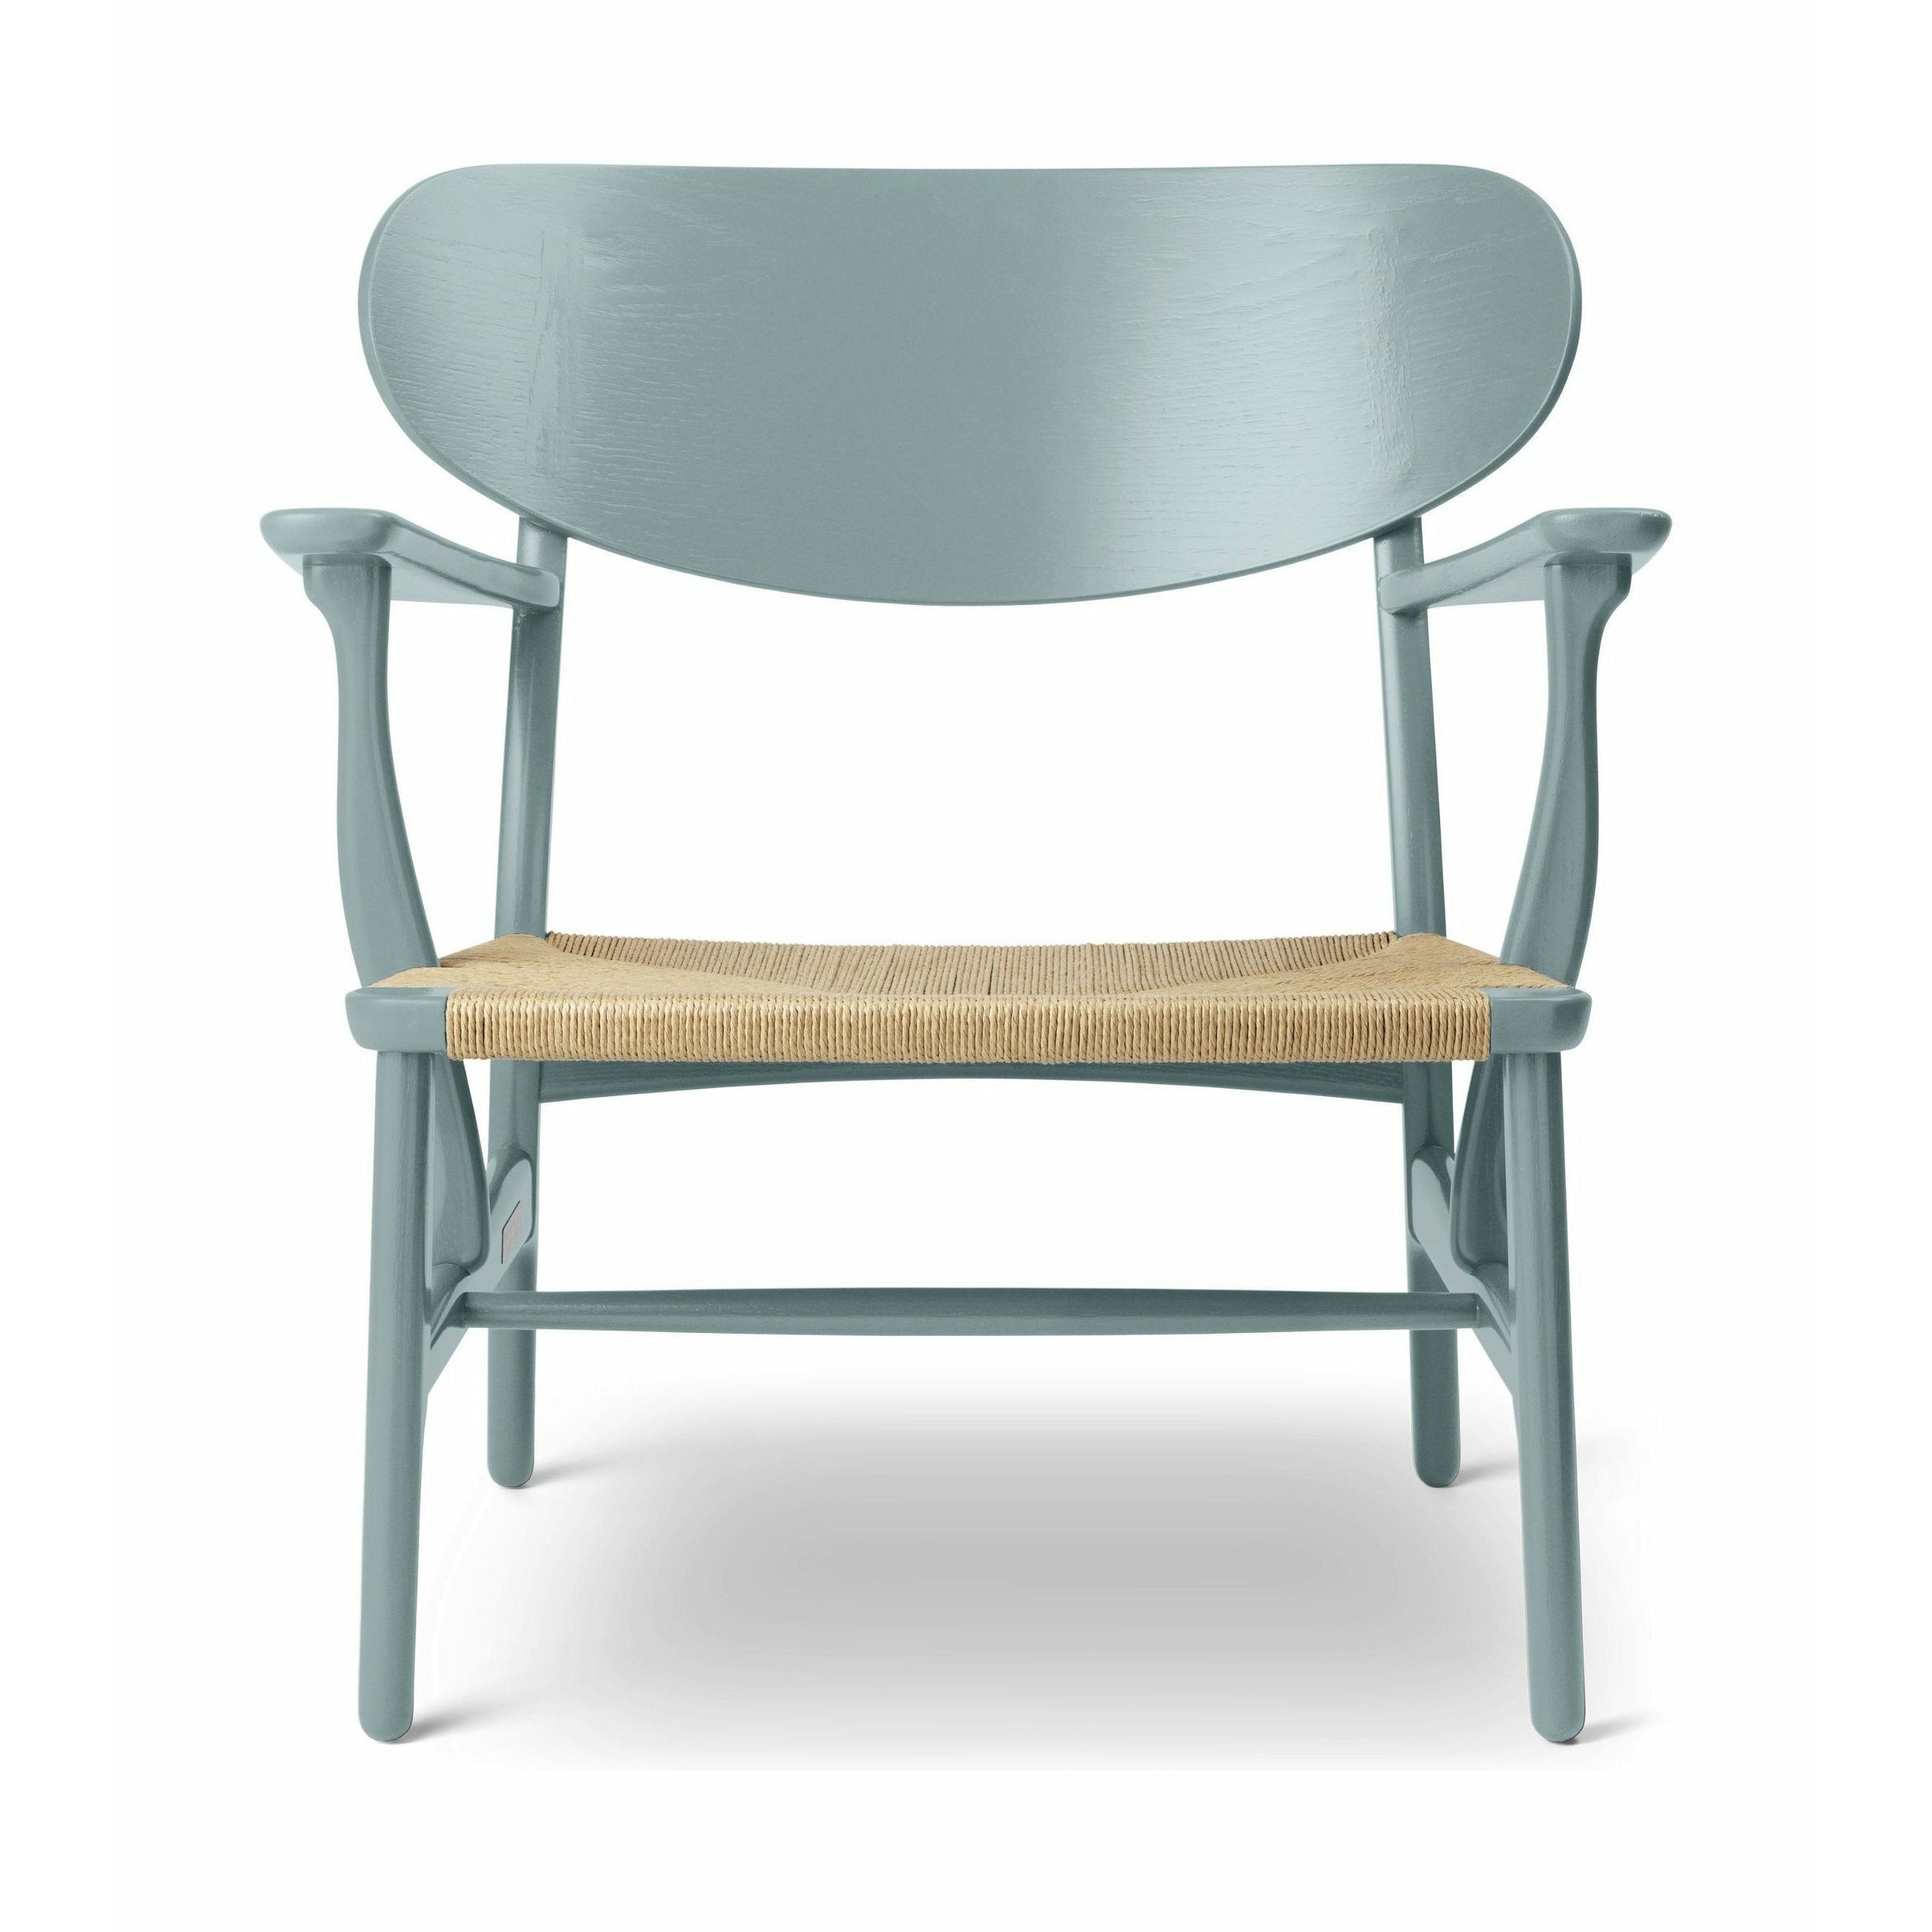 Carl Hansen CH22 Lounge Chair Oak, Tewter Blue/Natural Wicker